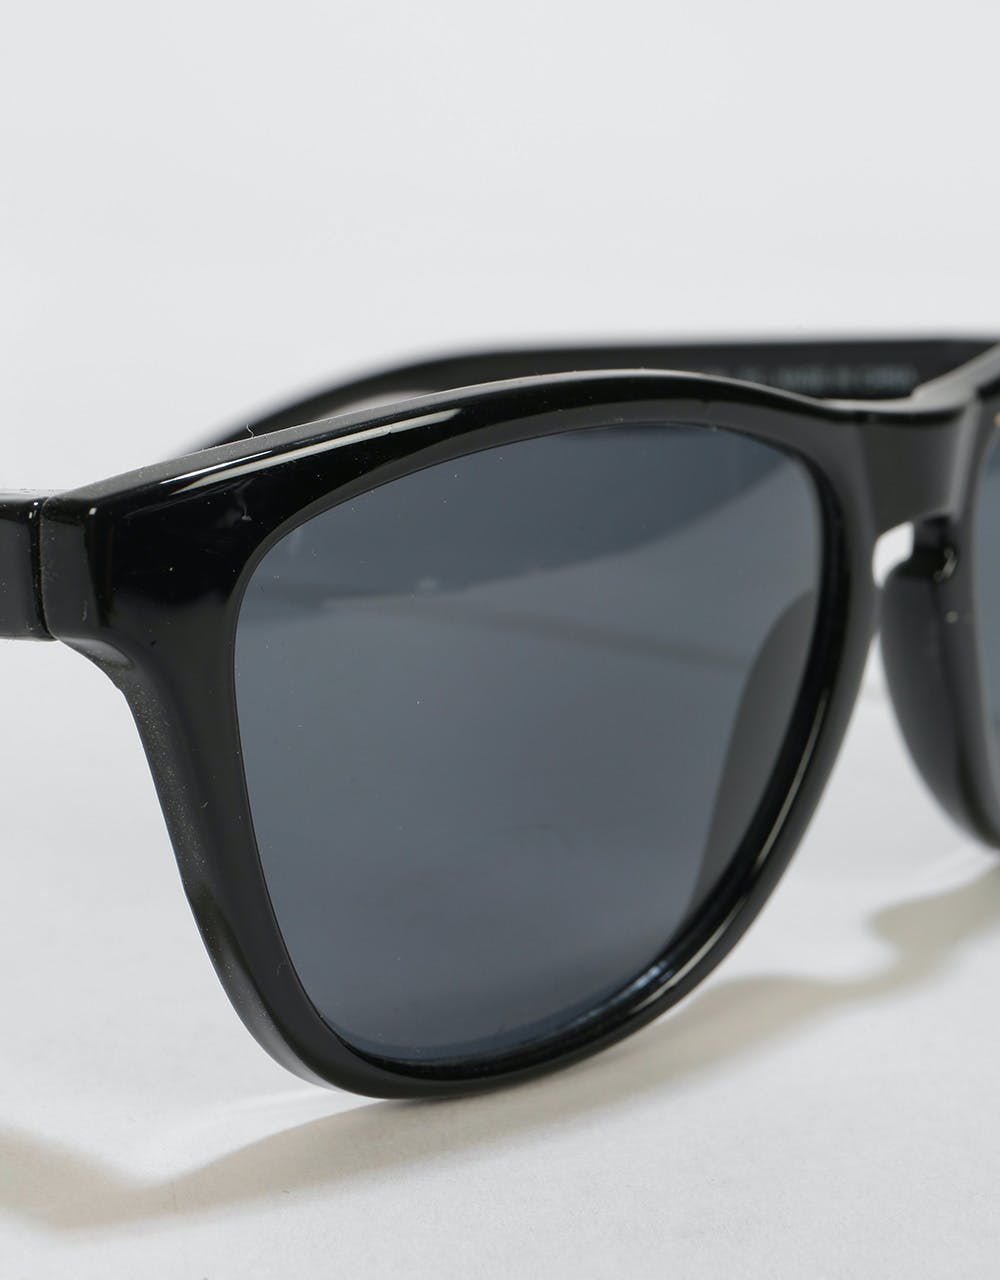 Route One New Wayfarer Sunglasses - Black